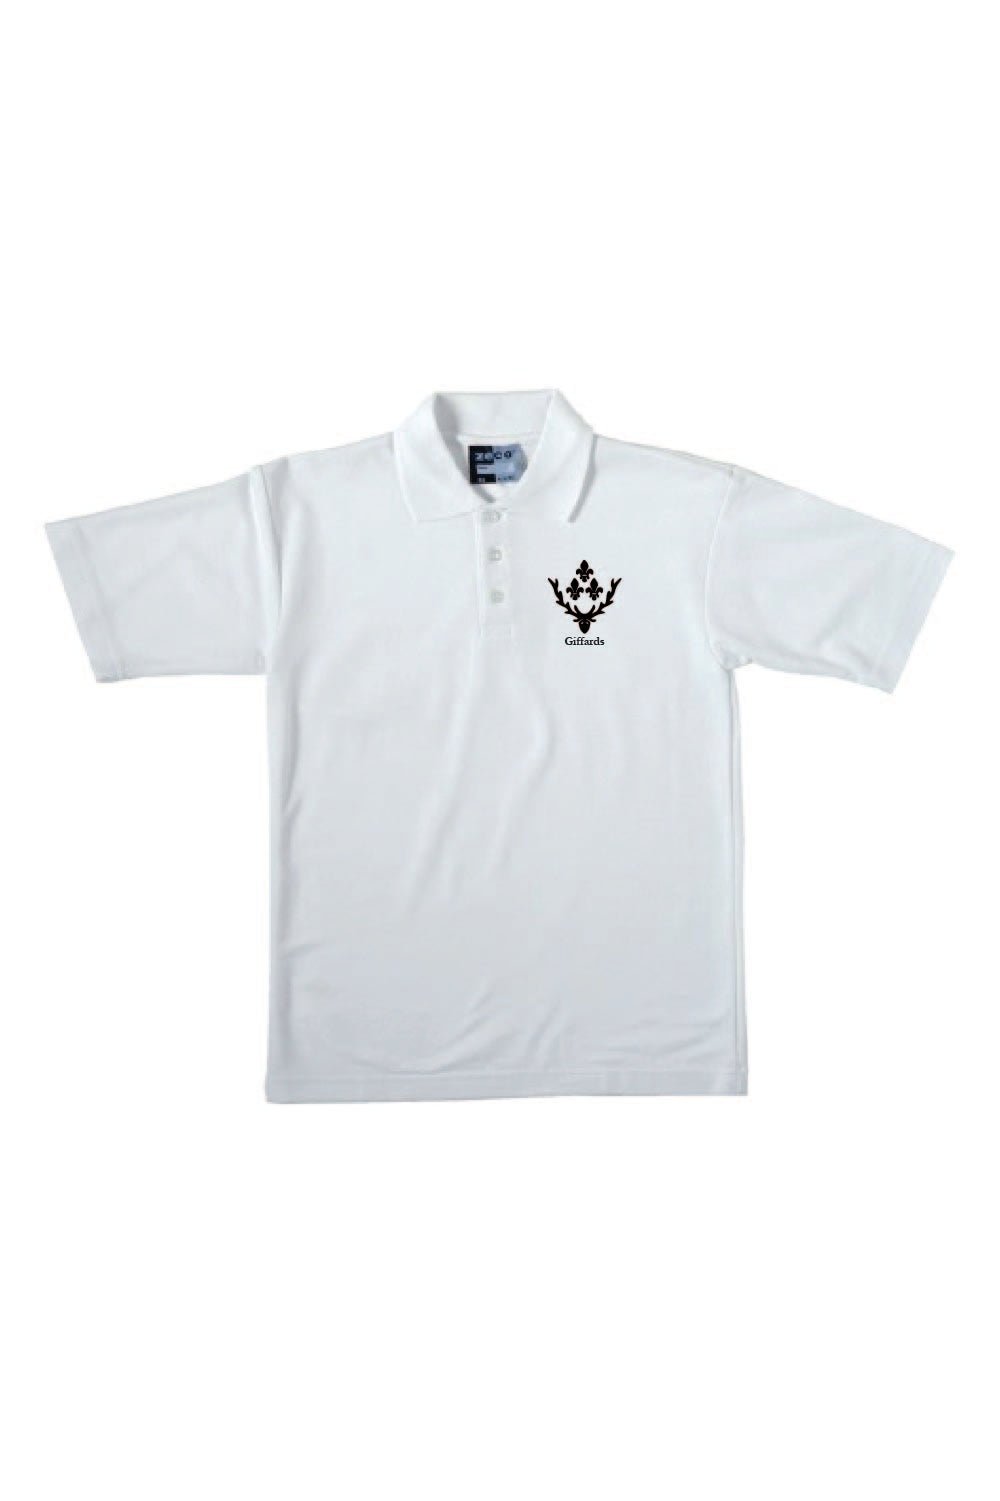 Giffards Primary White Polo Shirt - Uniformwise Schoolwear